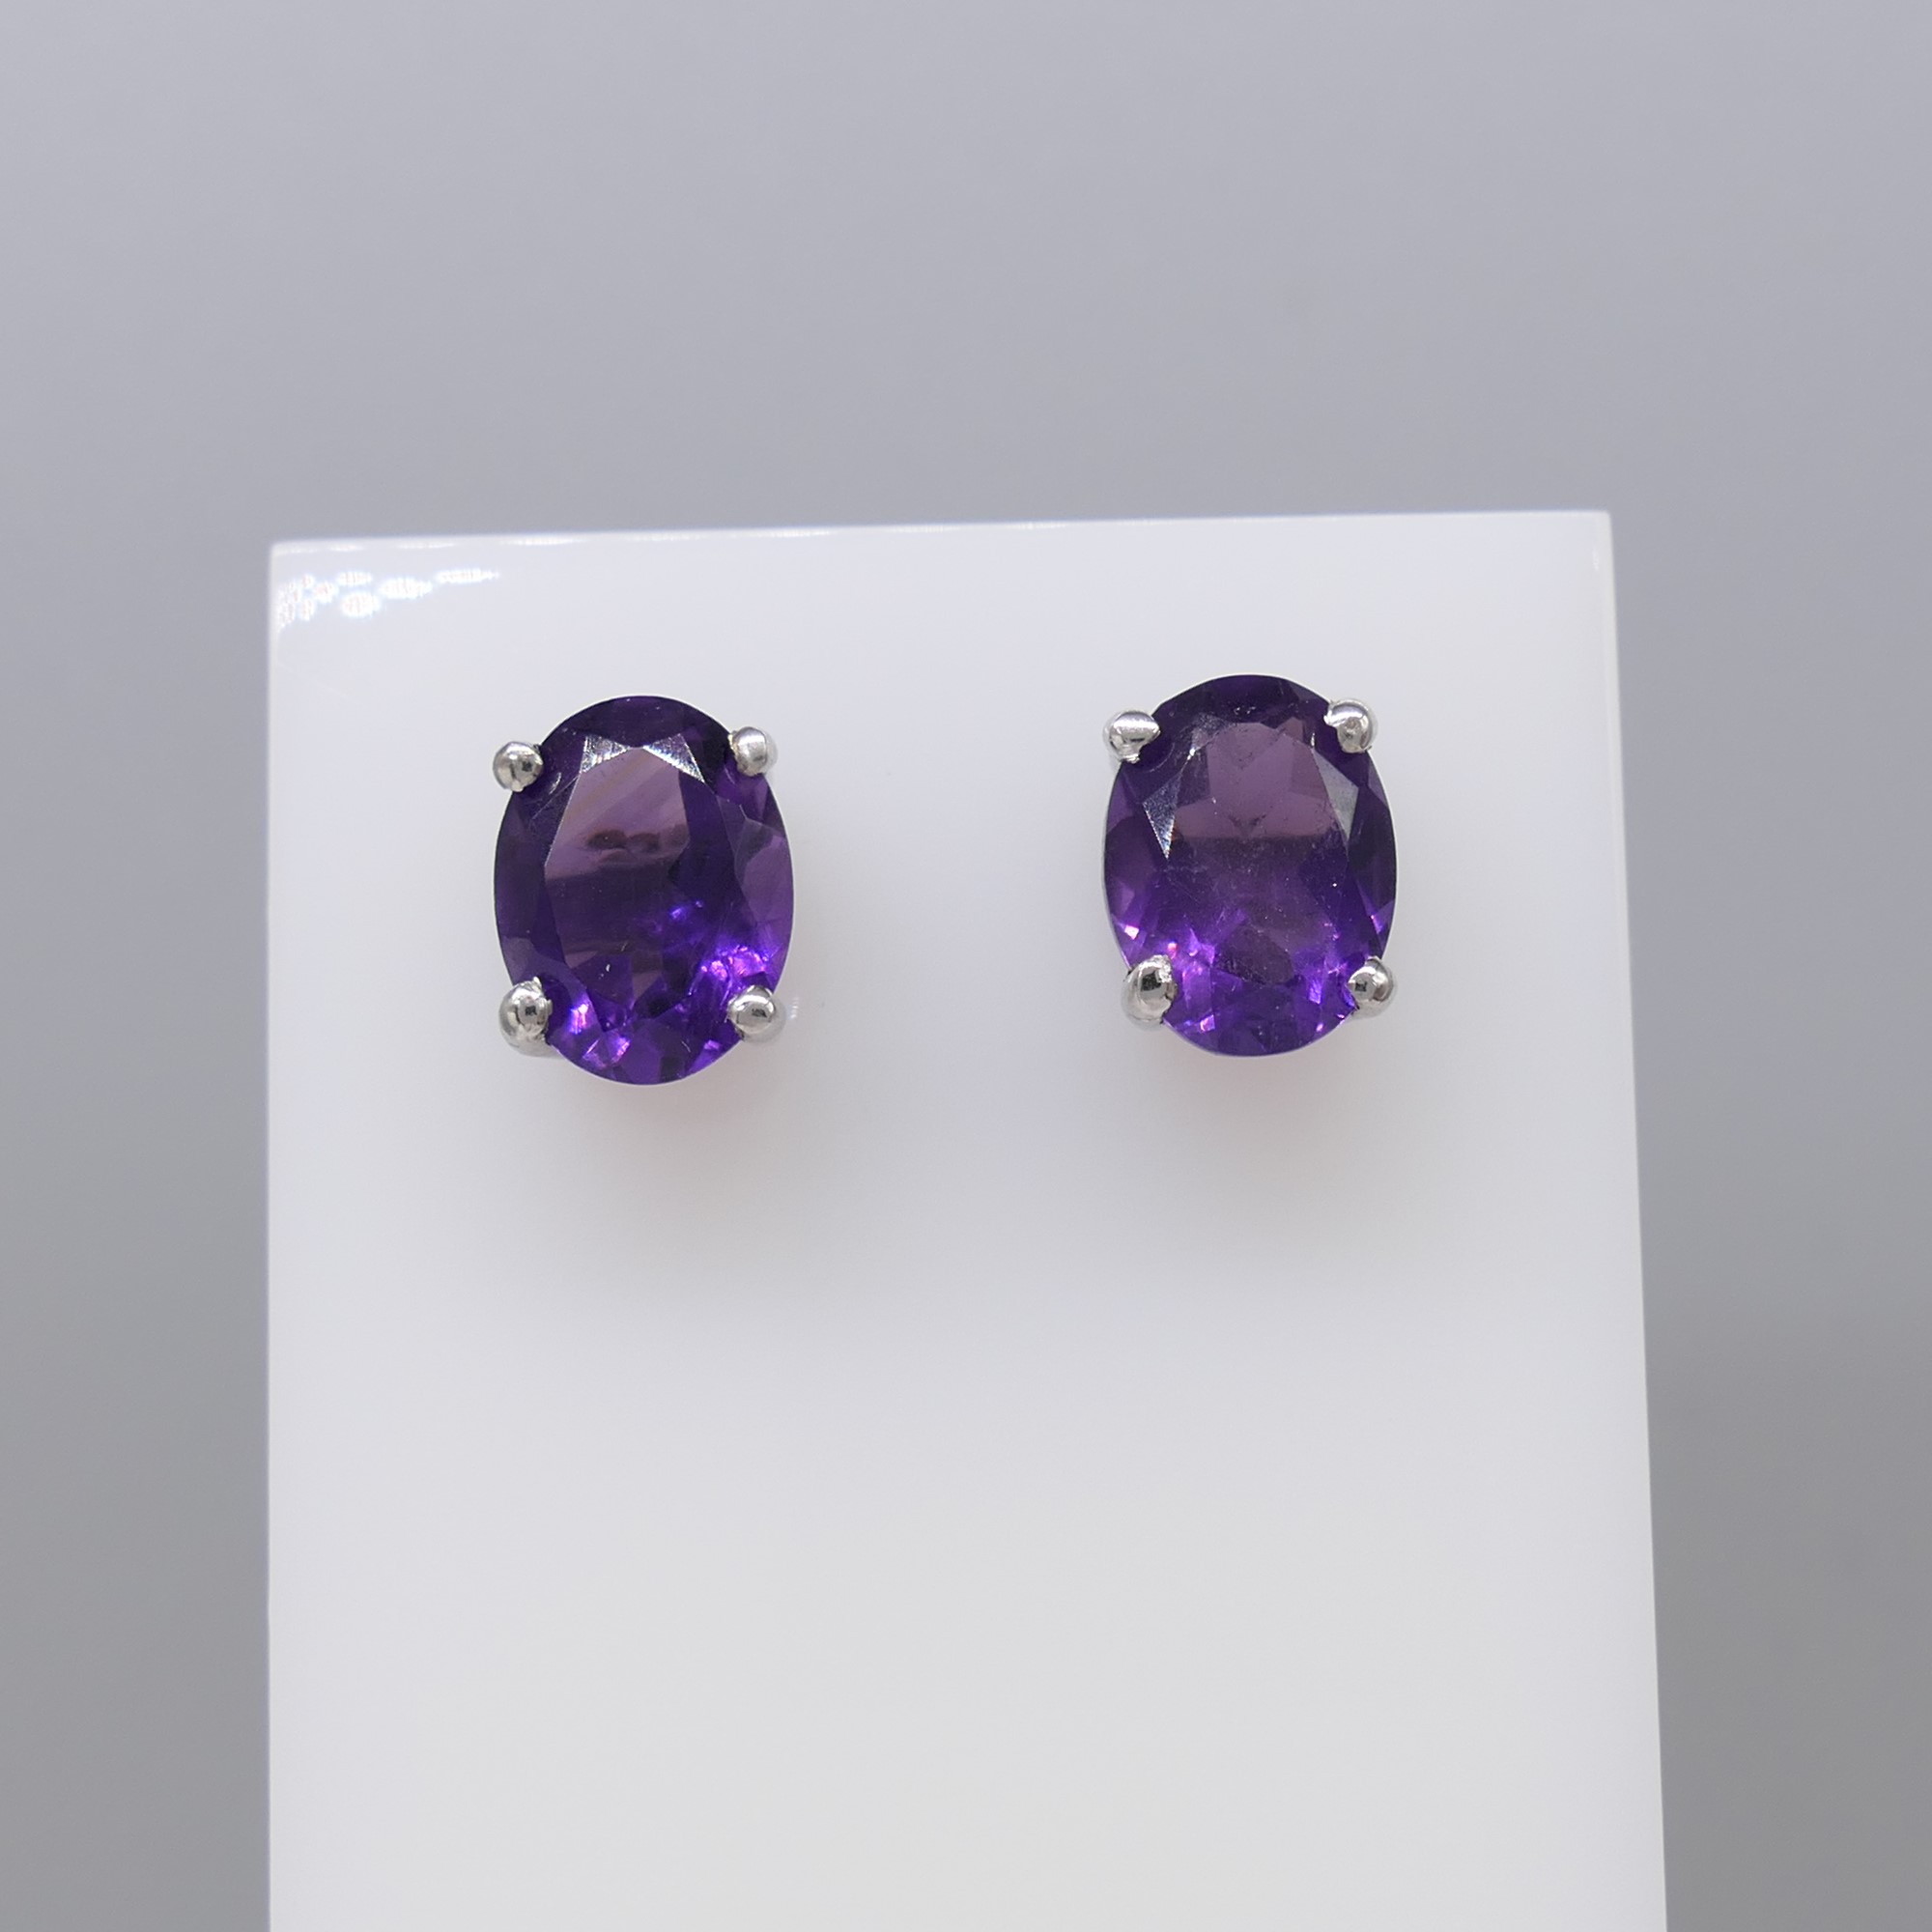 Pair of natural purple amethyst gemstone ear studs in silver - Image 2 of 5